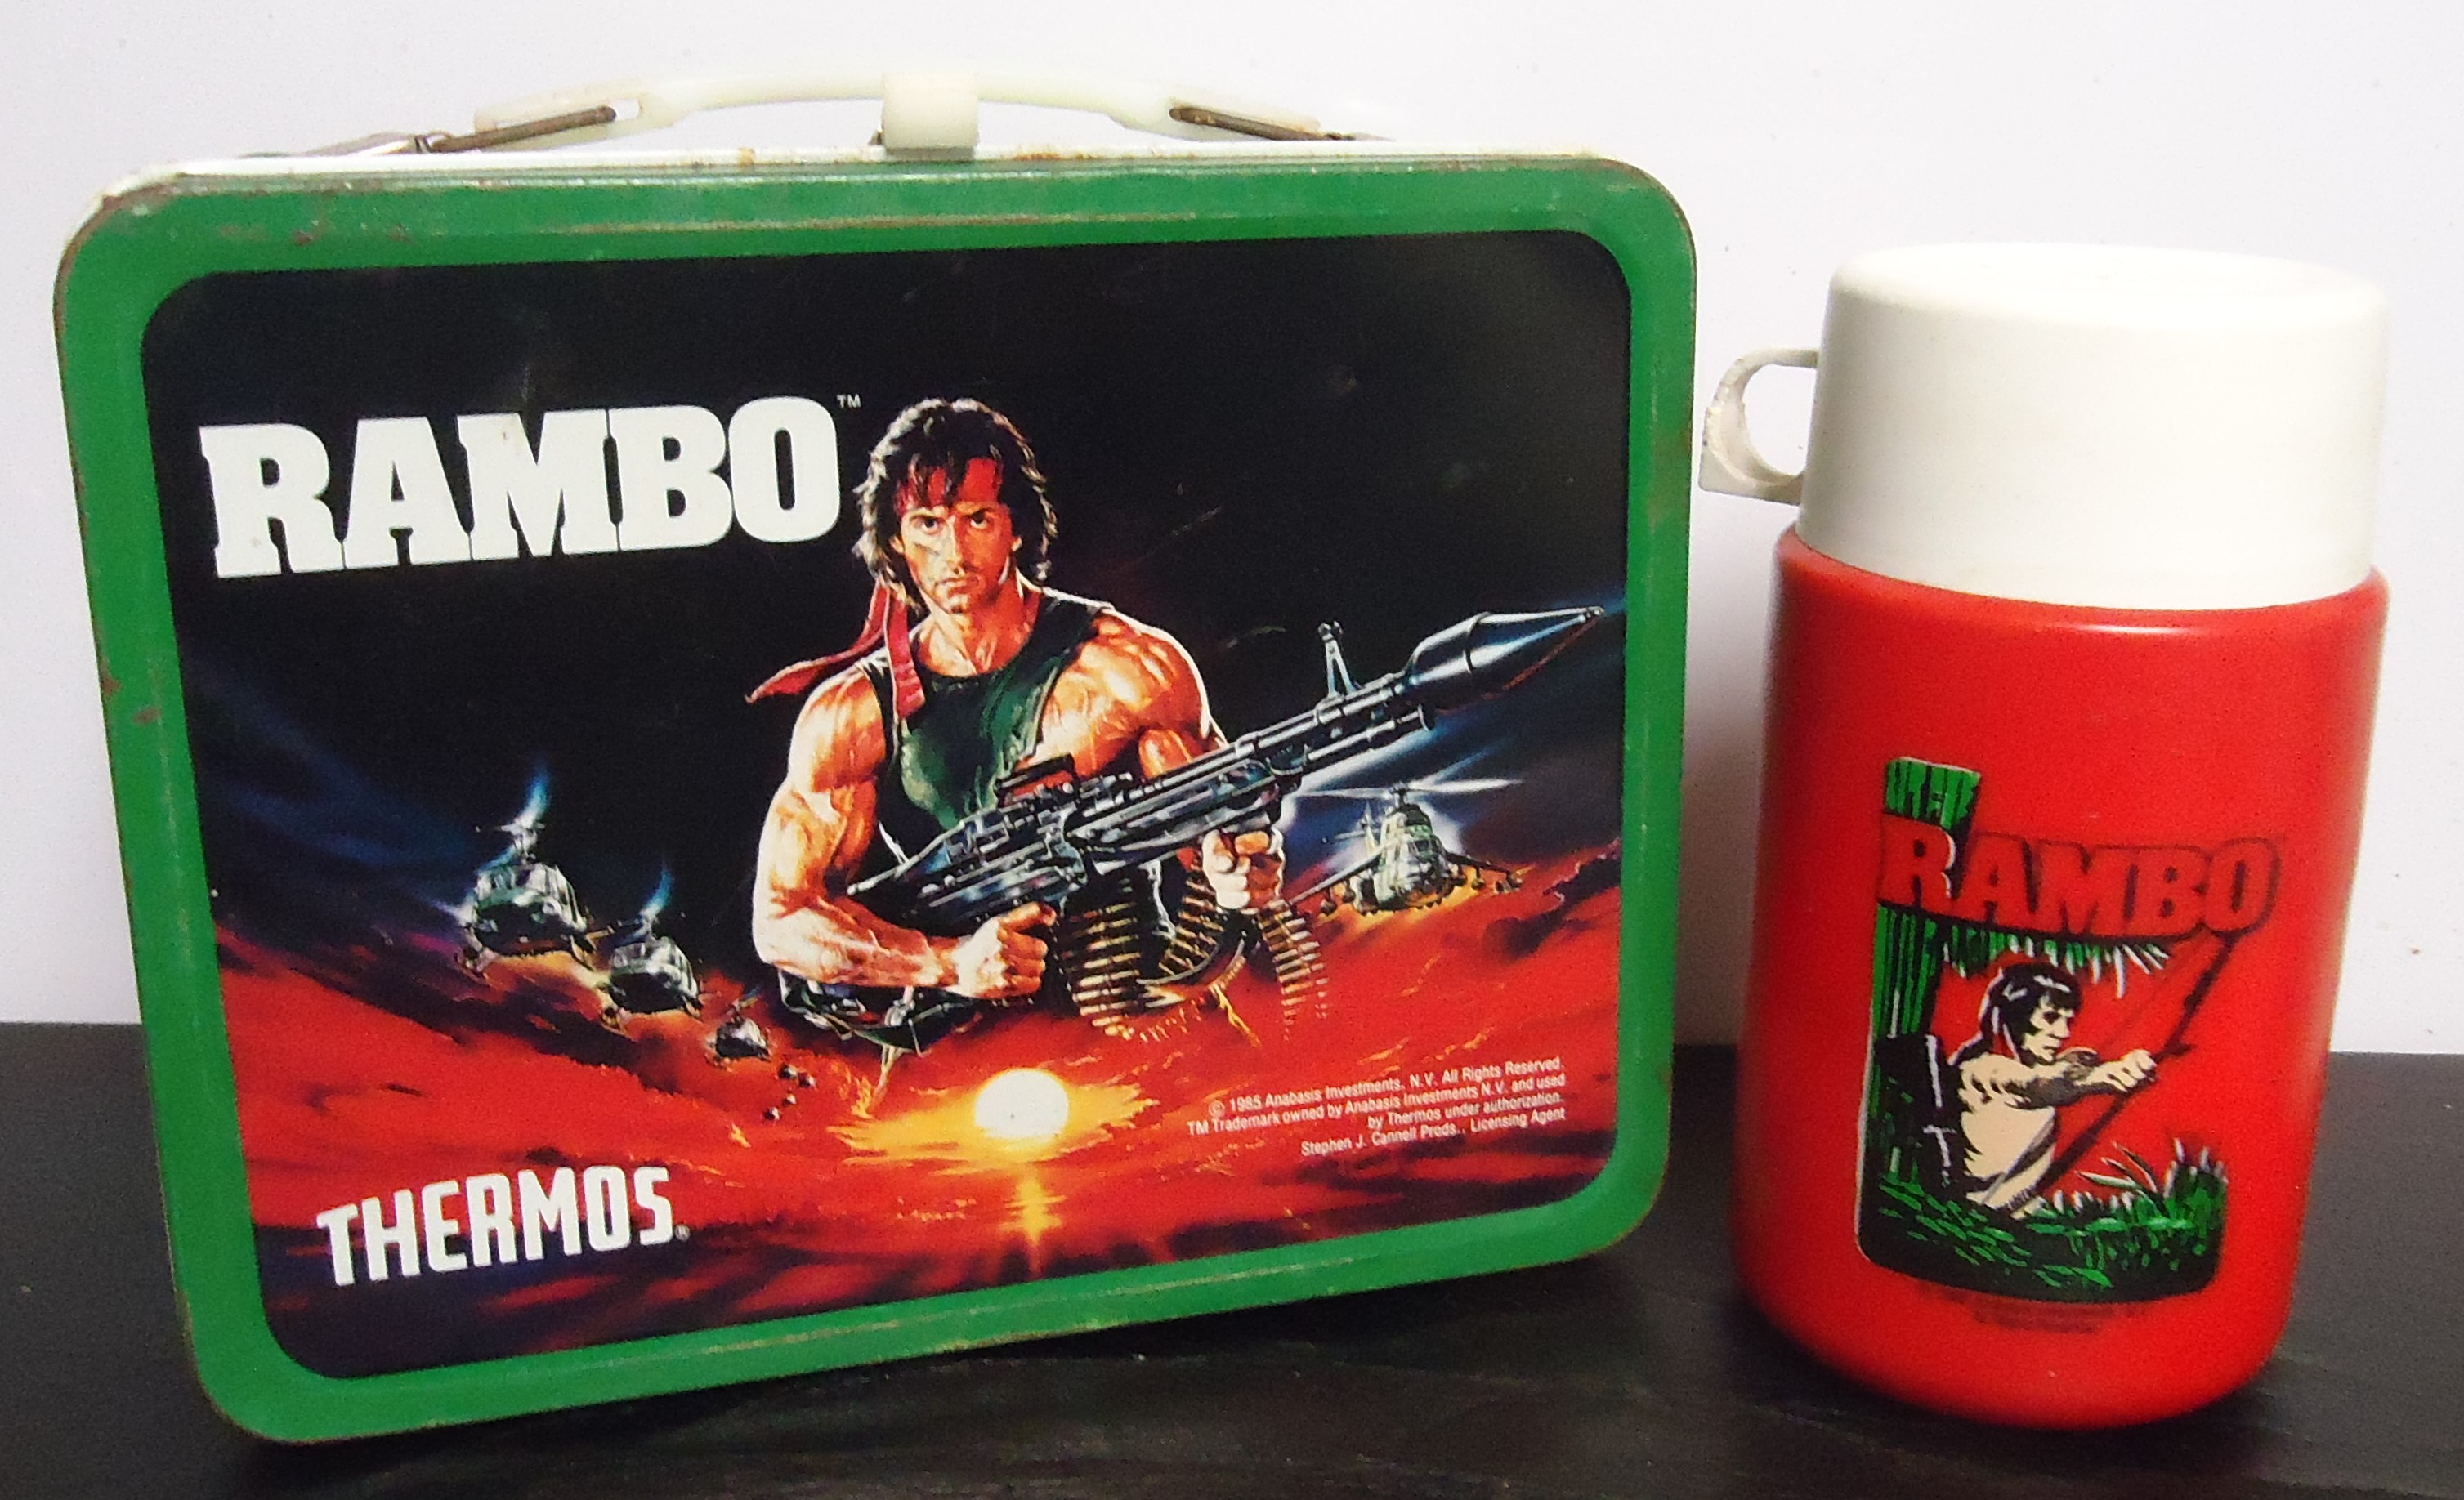 (2B) "Rambo" Metal Lunch Box
W/ Thermos
$55.00